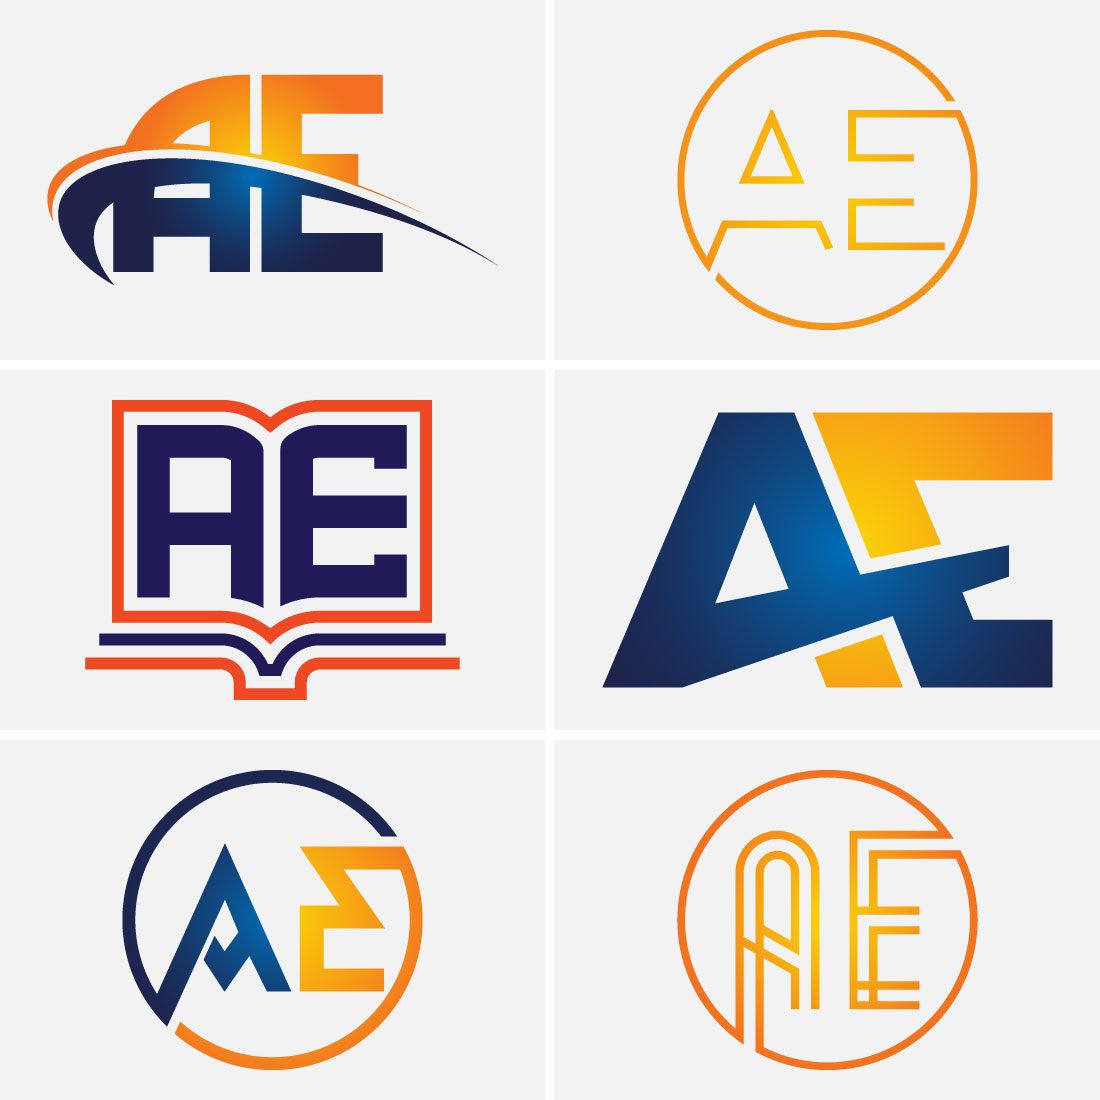 A-E Initial Letter Logo Design image preview.